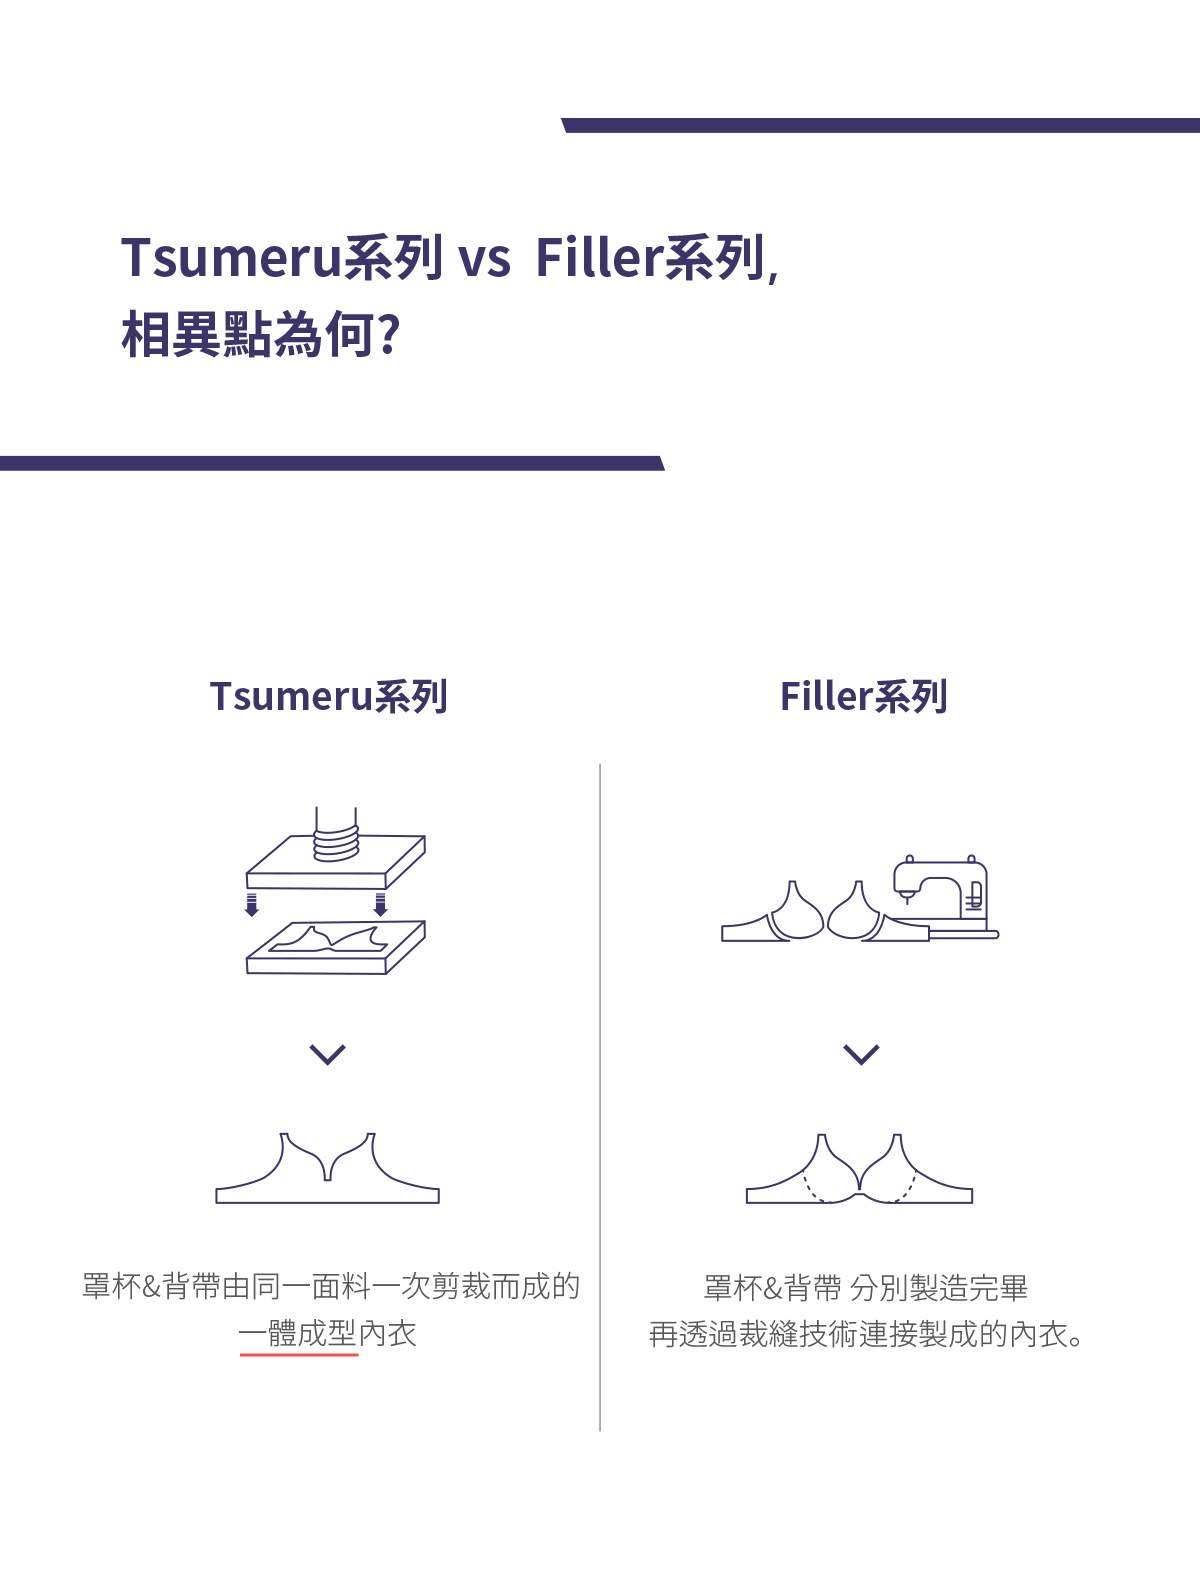 請問TSUMERU跟FILLER系列的差別?